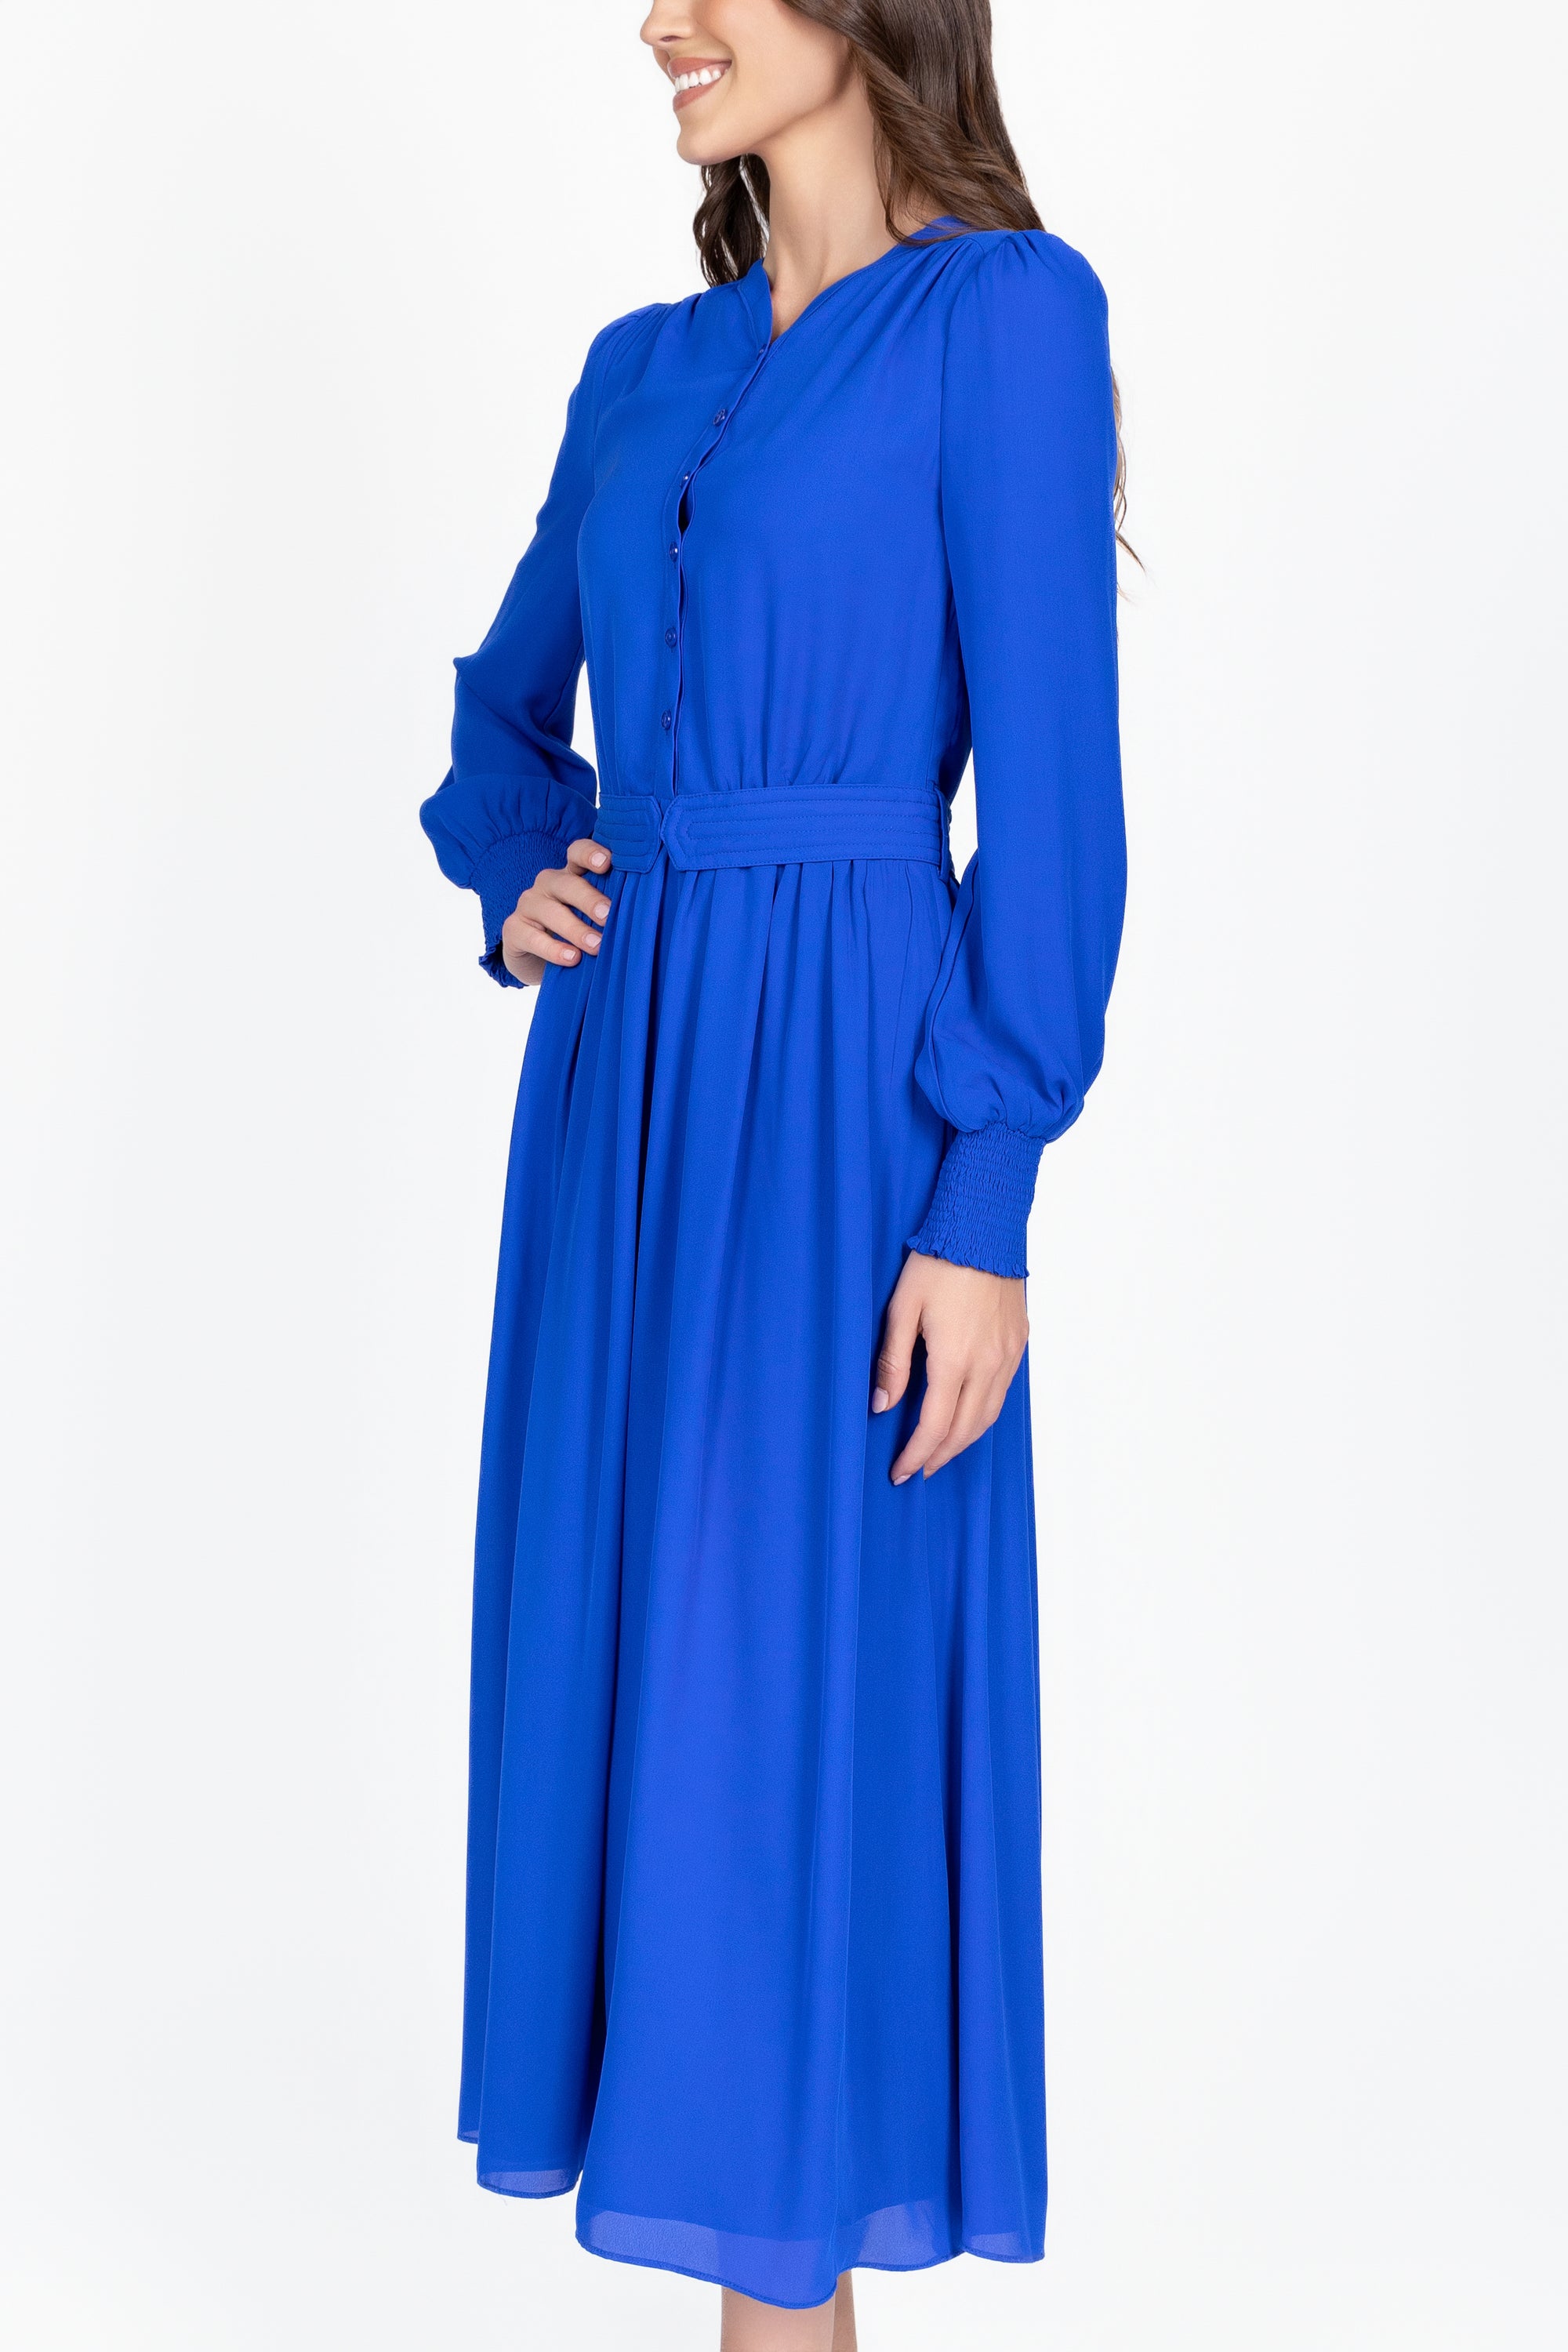 KATE DRESS (BLUE)